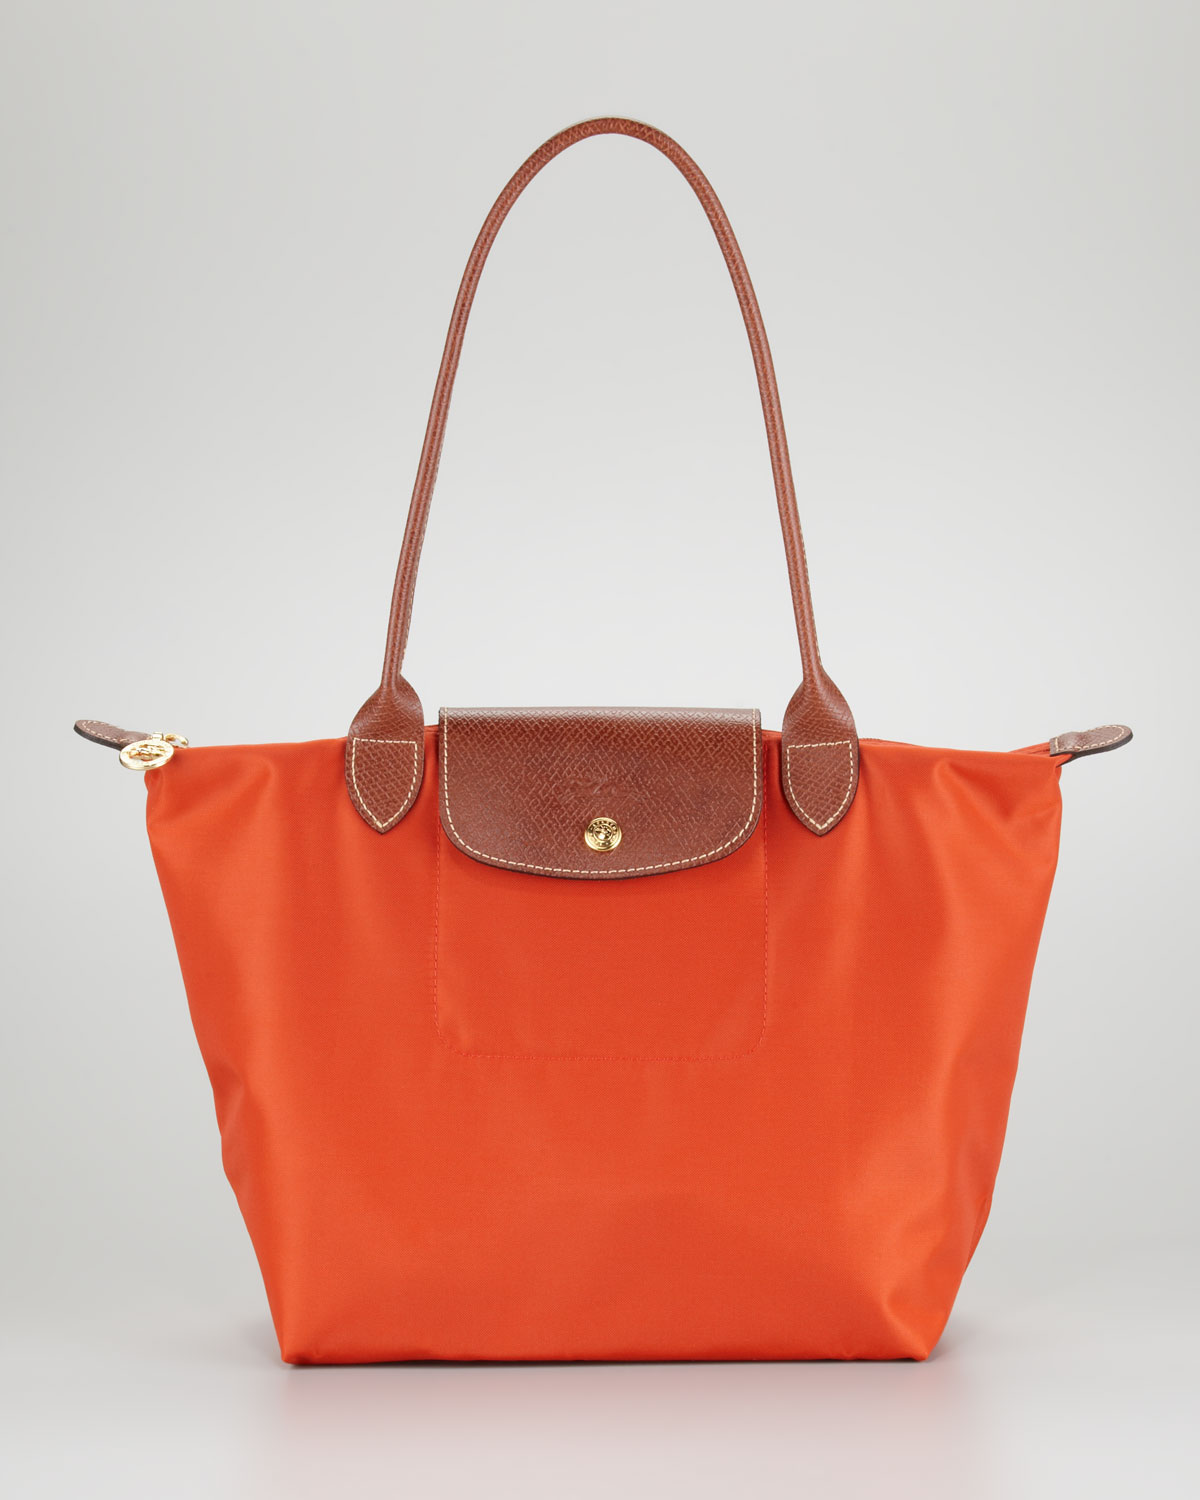 Lyst - Longchamp Le Pliage Small Shoulder Tote Bag in Orange